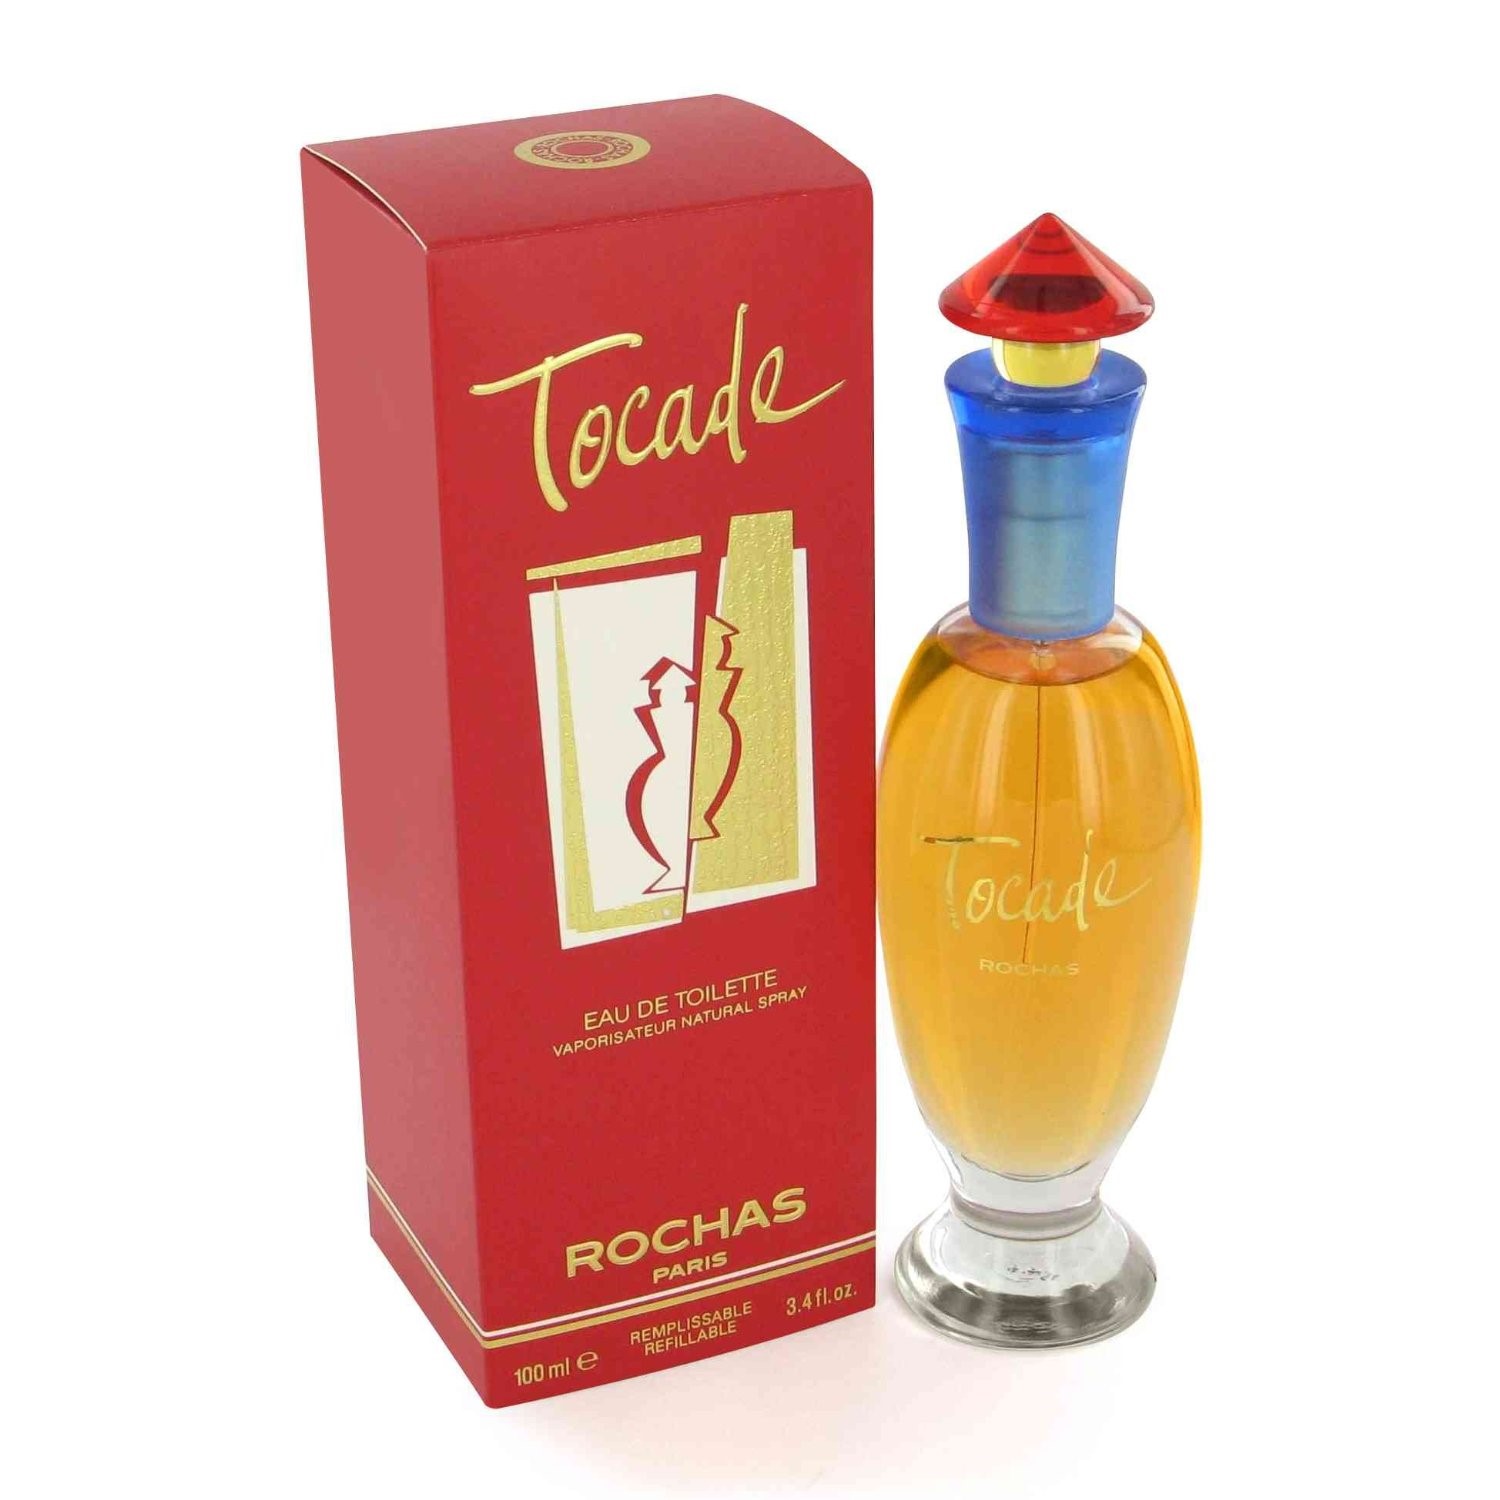 Tocade By Rochas For Women. Eau De Toilette Spray 3.4 Ounces - image 1 of 2